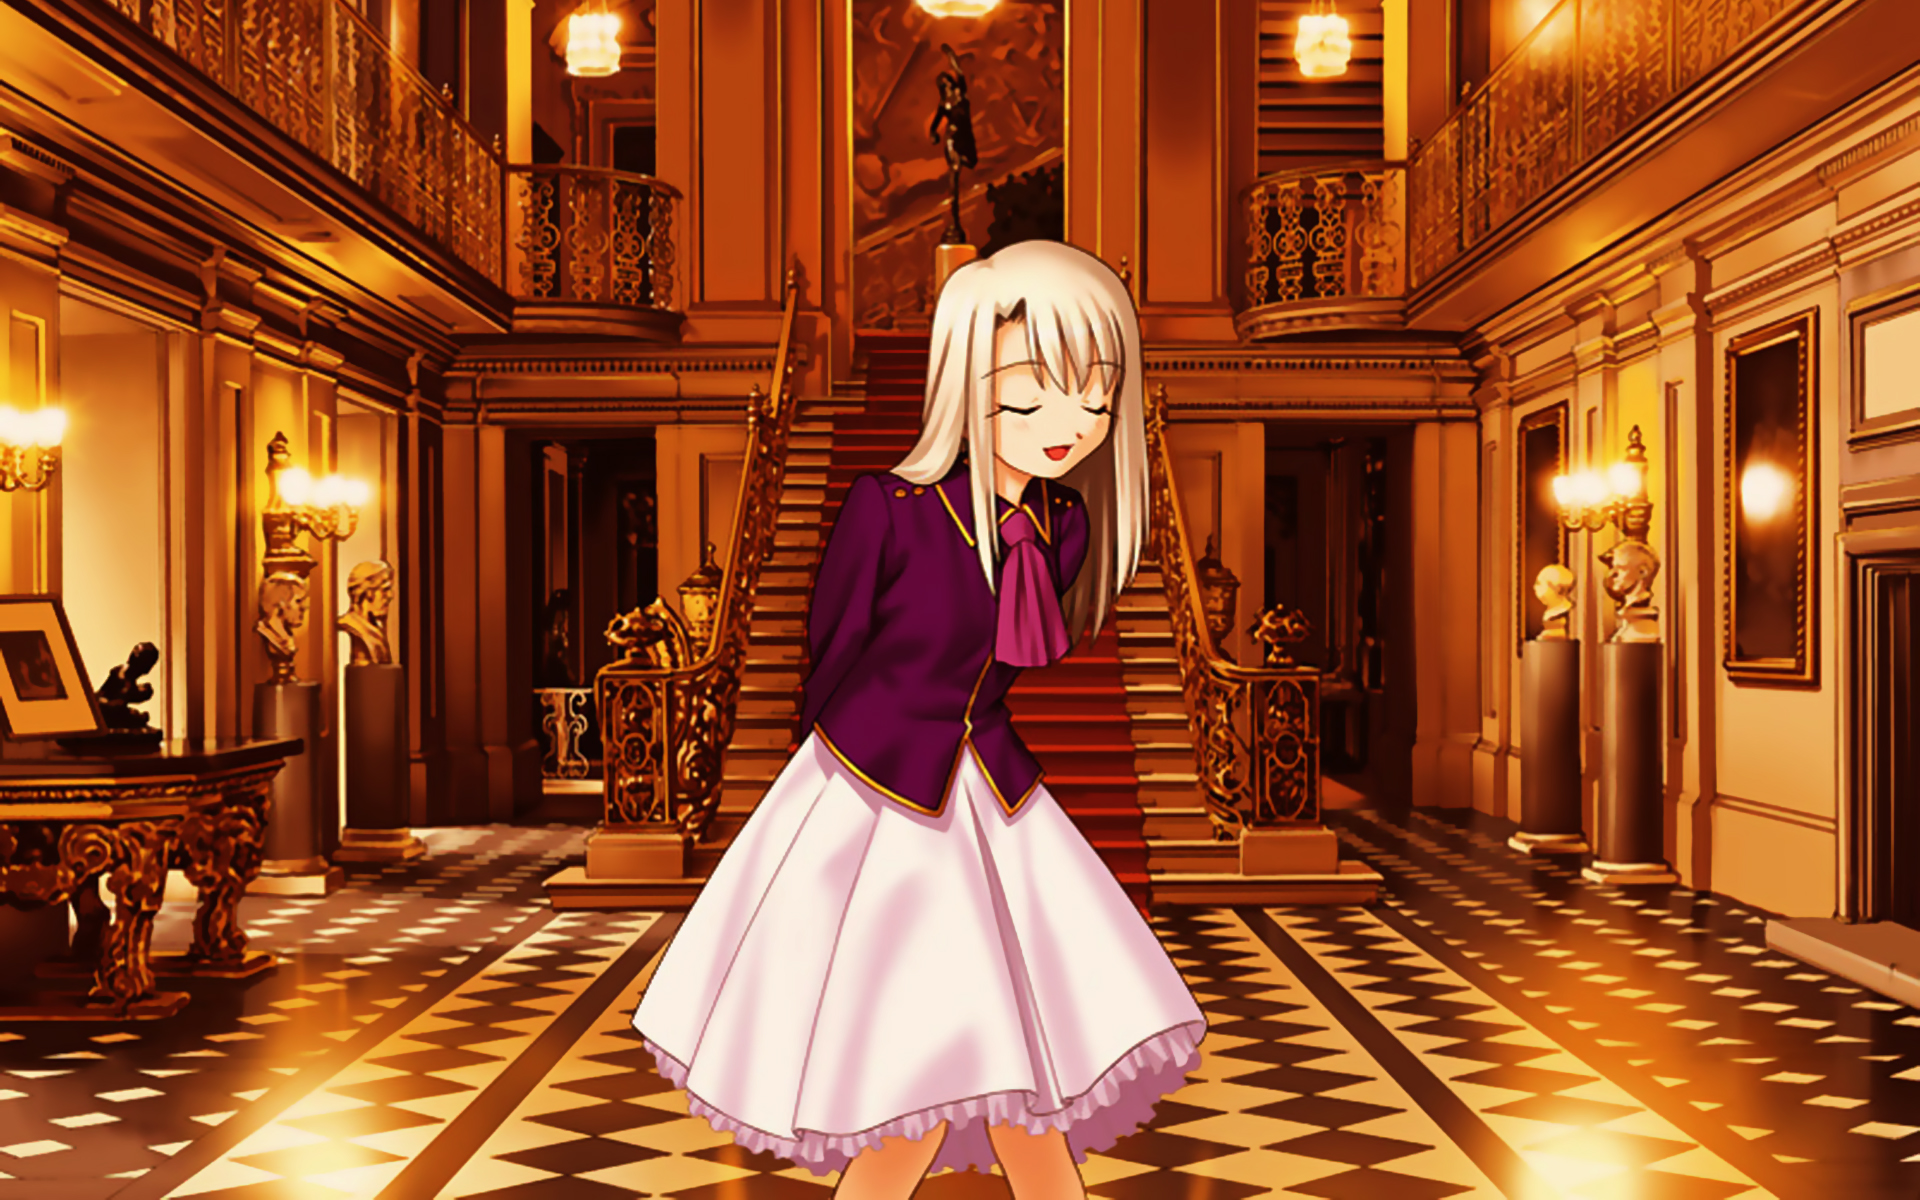 Illyasviel Von Einzbern from the anime Fate/stay night, gracing your desktop with her elegance.